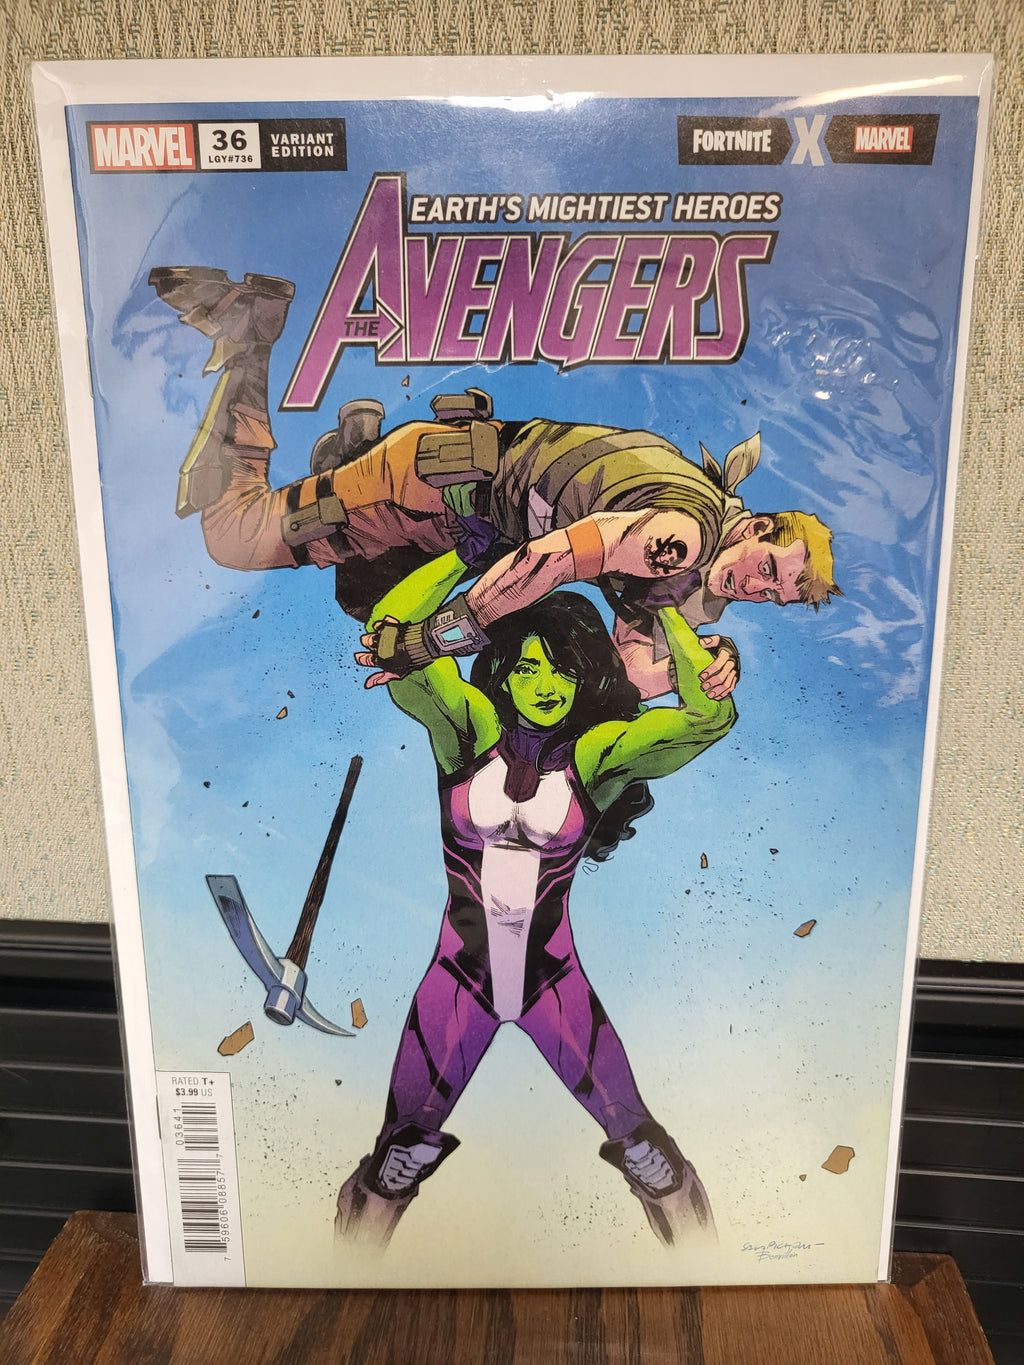 Avengers #36 (LGY 736) 2020 - Black Panther vs. Moon Knight - Fortnite Variant Cover Comic